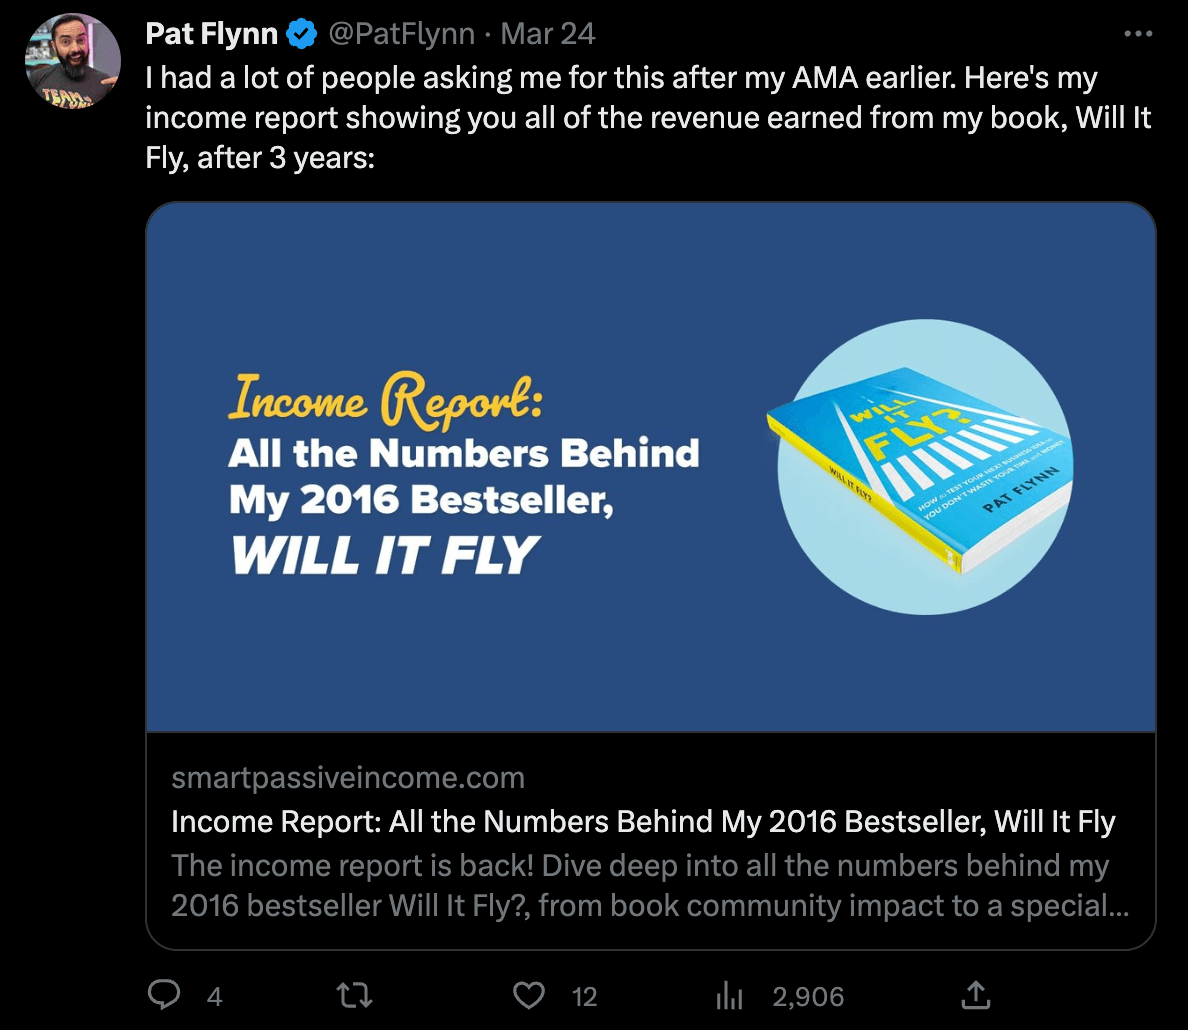 Pay Flynn tweet